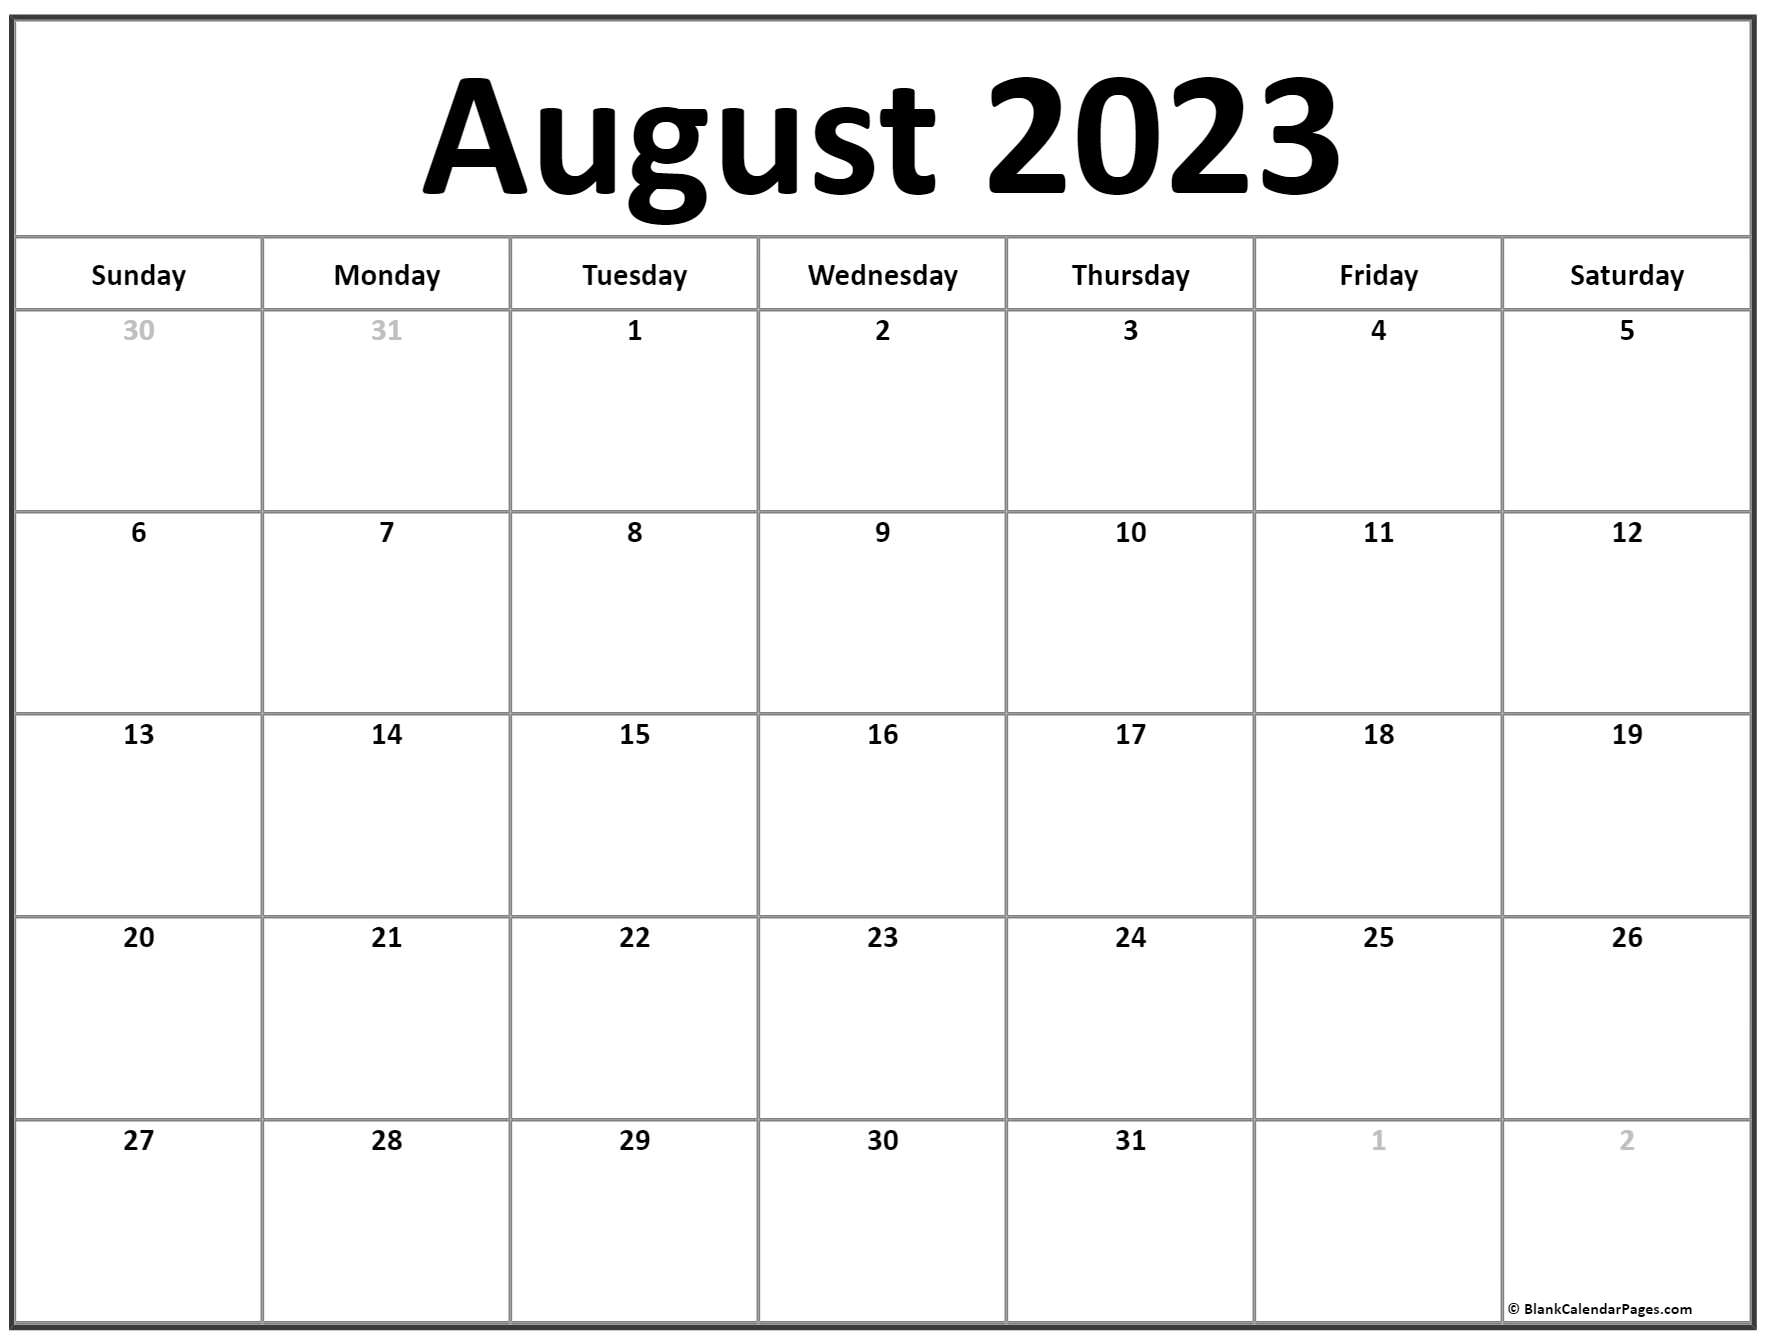 March calendar. Календарь сентябрь 2022. Календарь март. Календарь март 2022. Календарь август 2022.